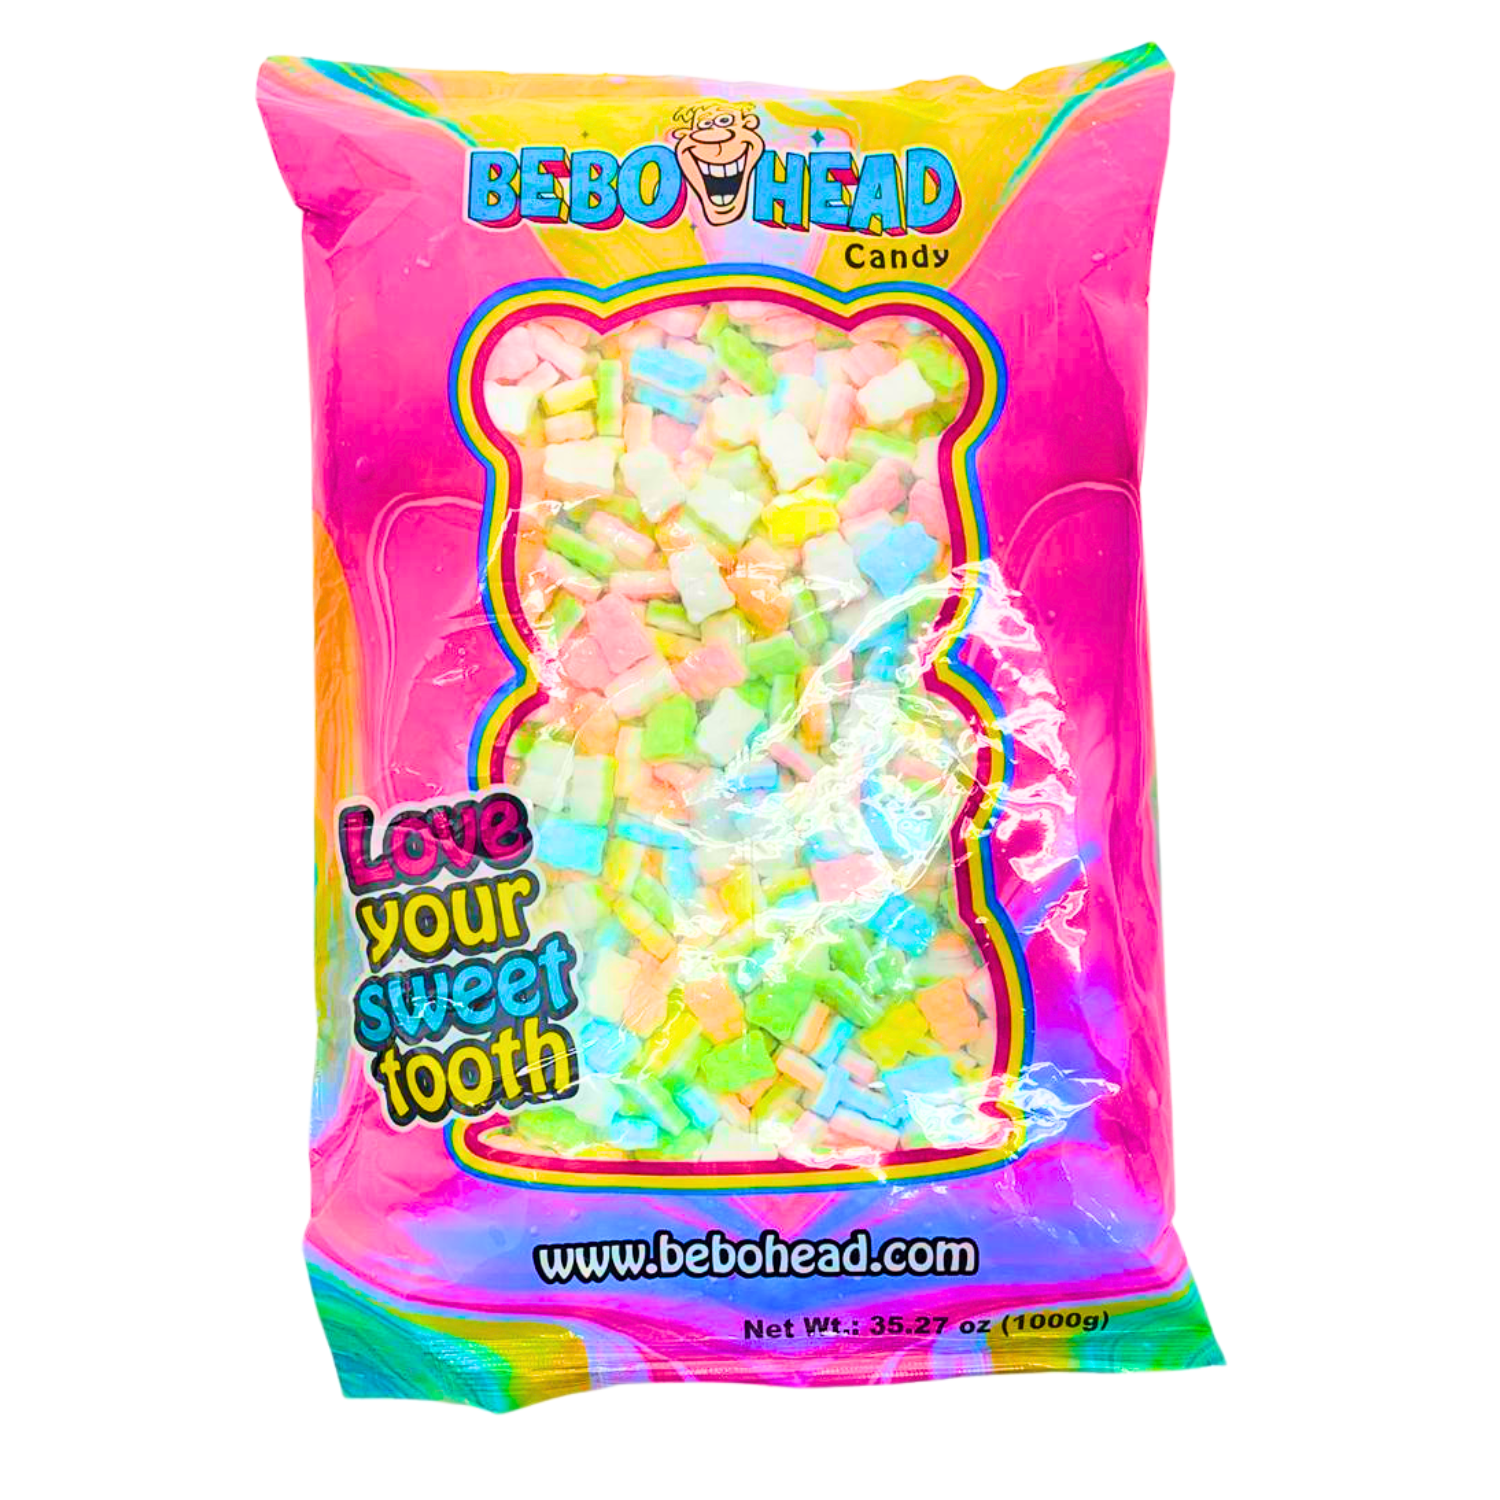 Mini Bears Press Candy - 2.2 Pounds